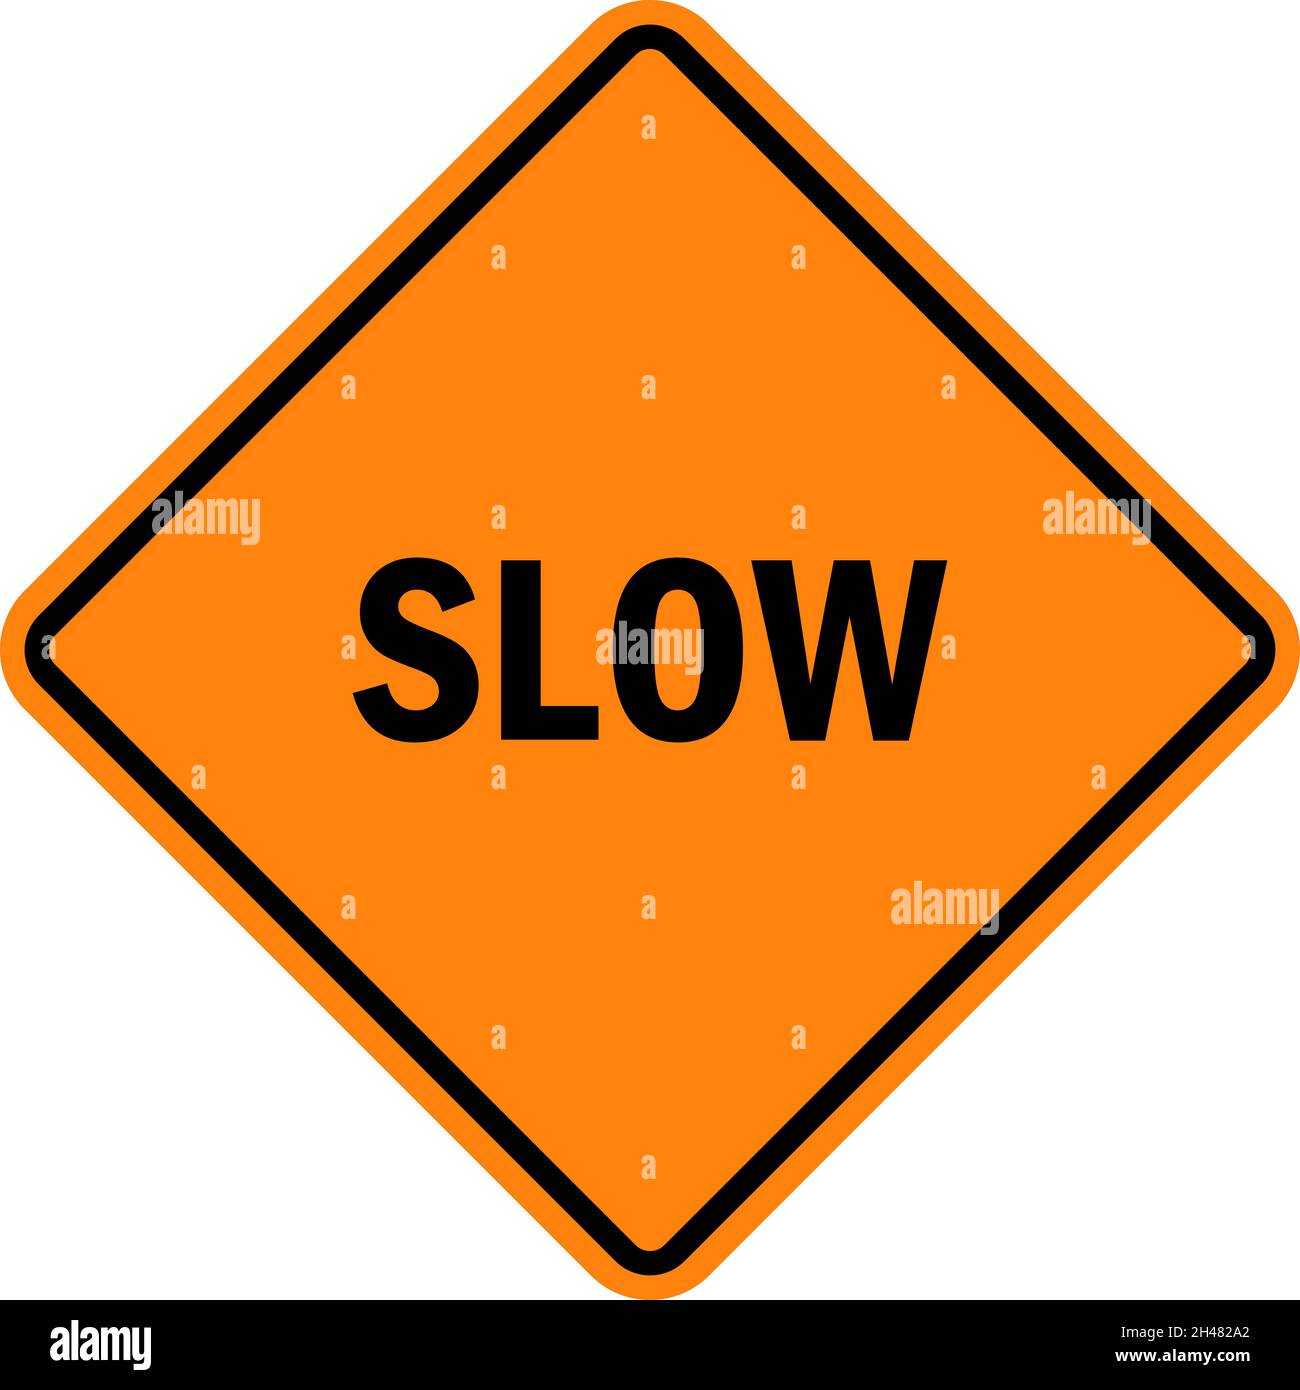 Slow advisory sign. Black on orange diamond background. Traffic signs and symbols. Stock Vector